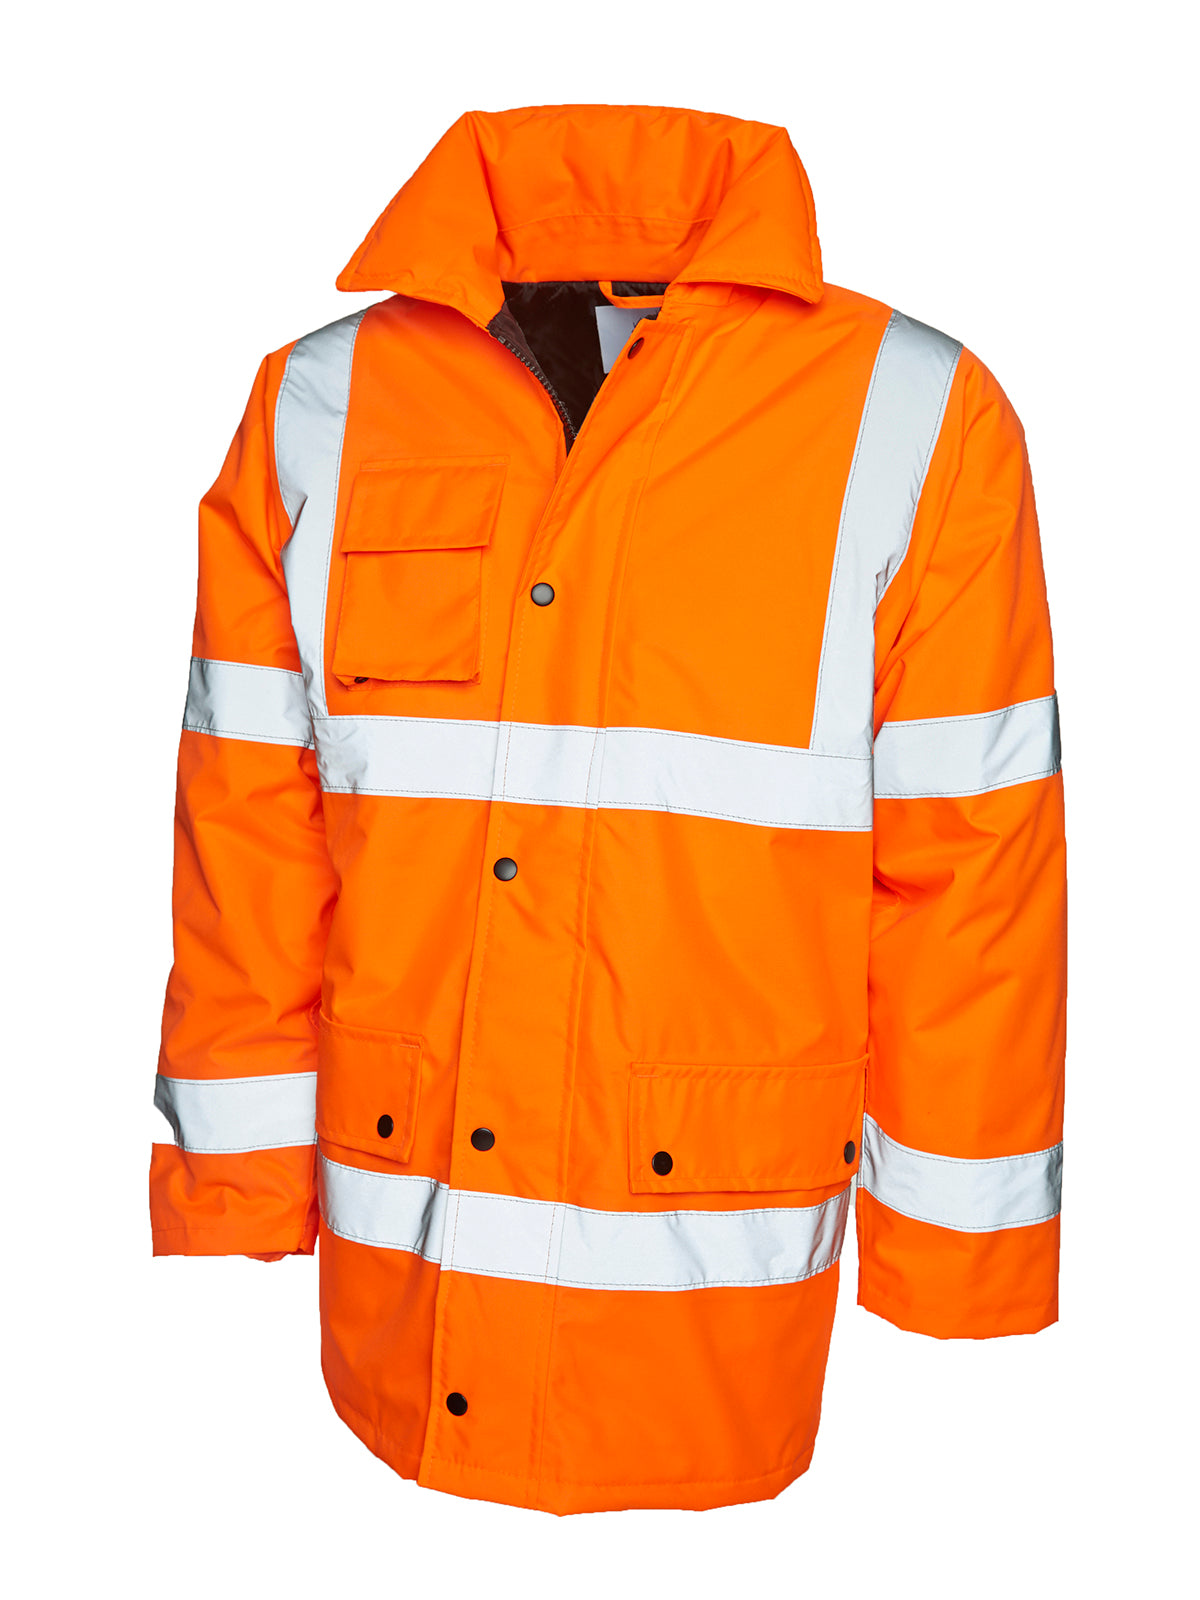 Uneek Road Safety Jacket UC803 - Orange